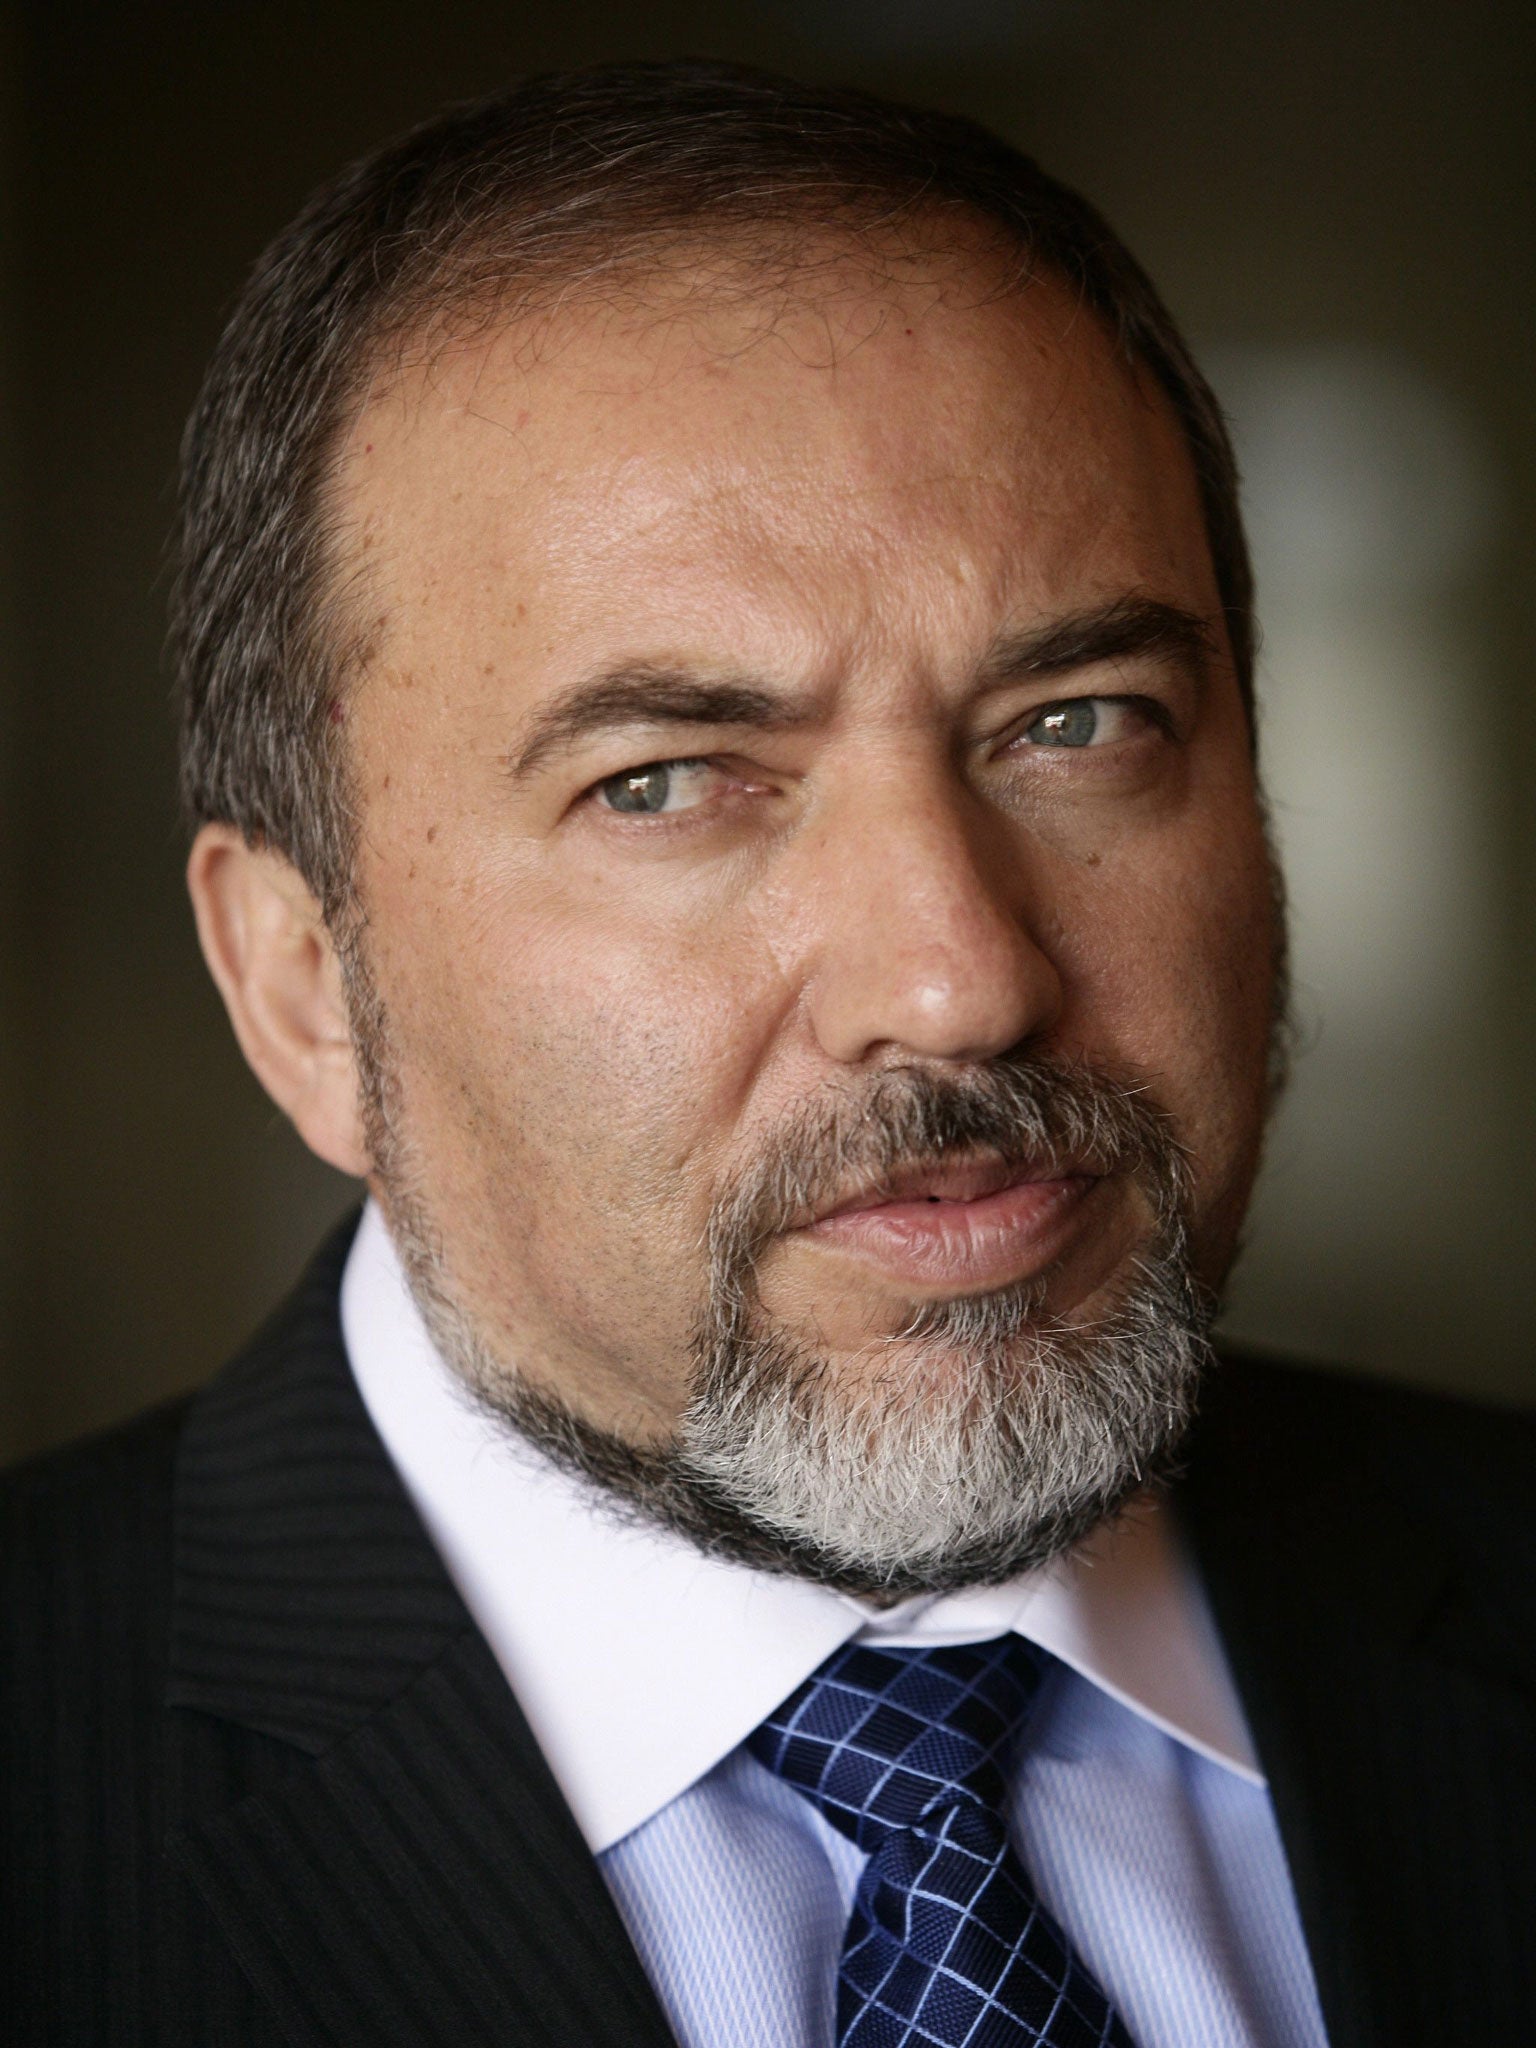 Avigdor Lieberman: The far-right politician said previous military strikes had been ineffective